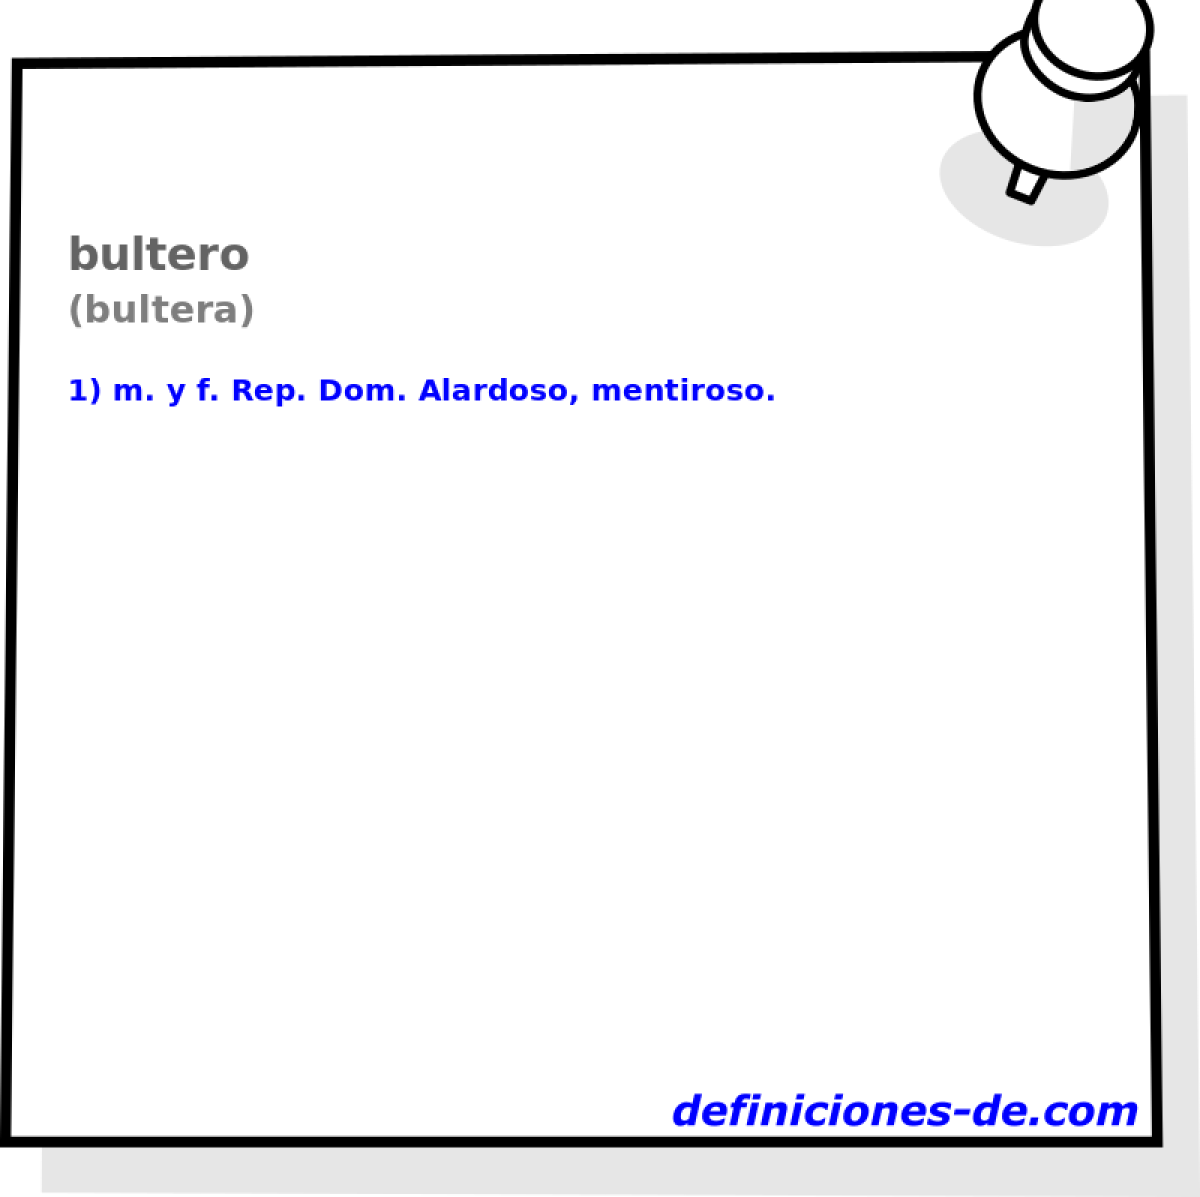 bultero (bultera)